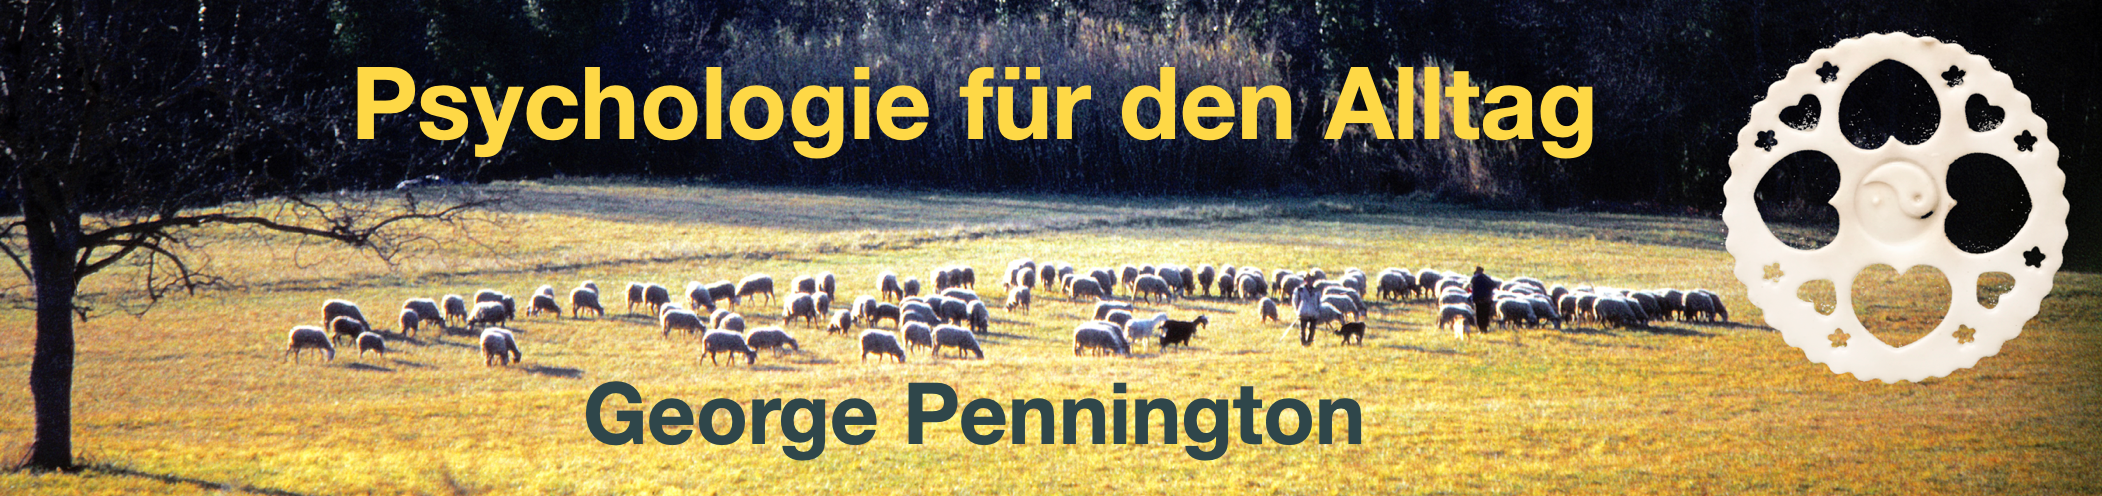 Pennington-Training